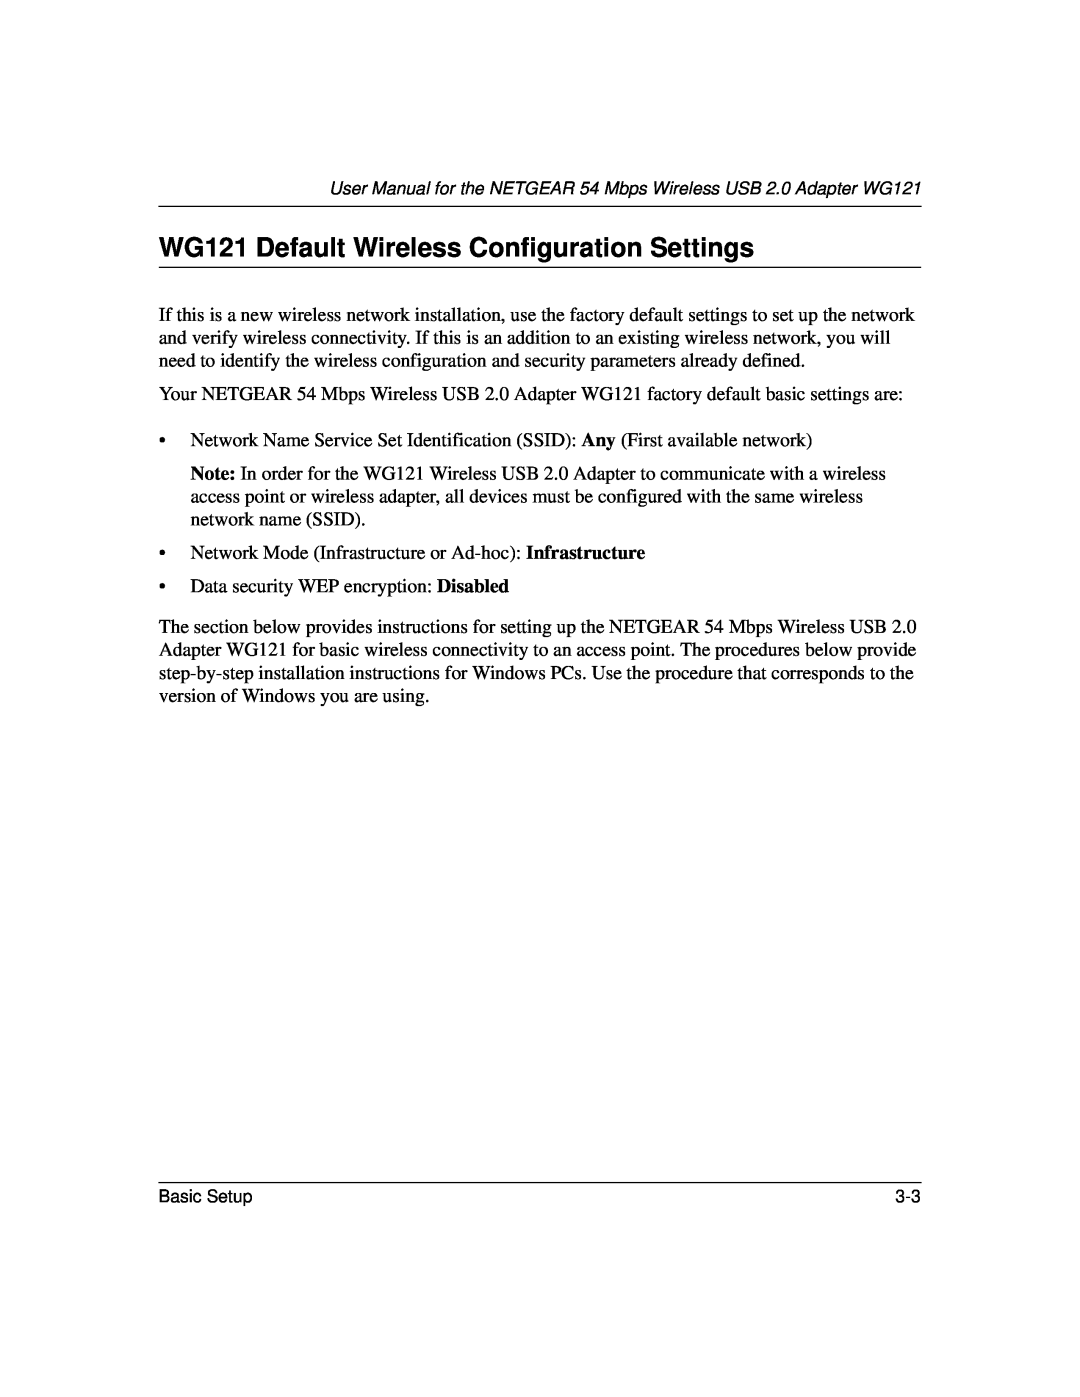 NETGEAR user manual WG121 Default Wireless Configuration Settings 